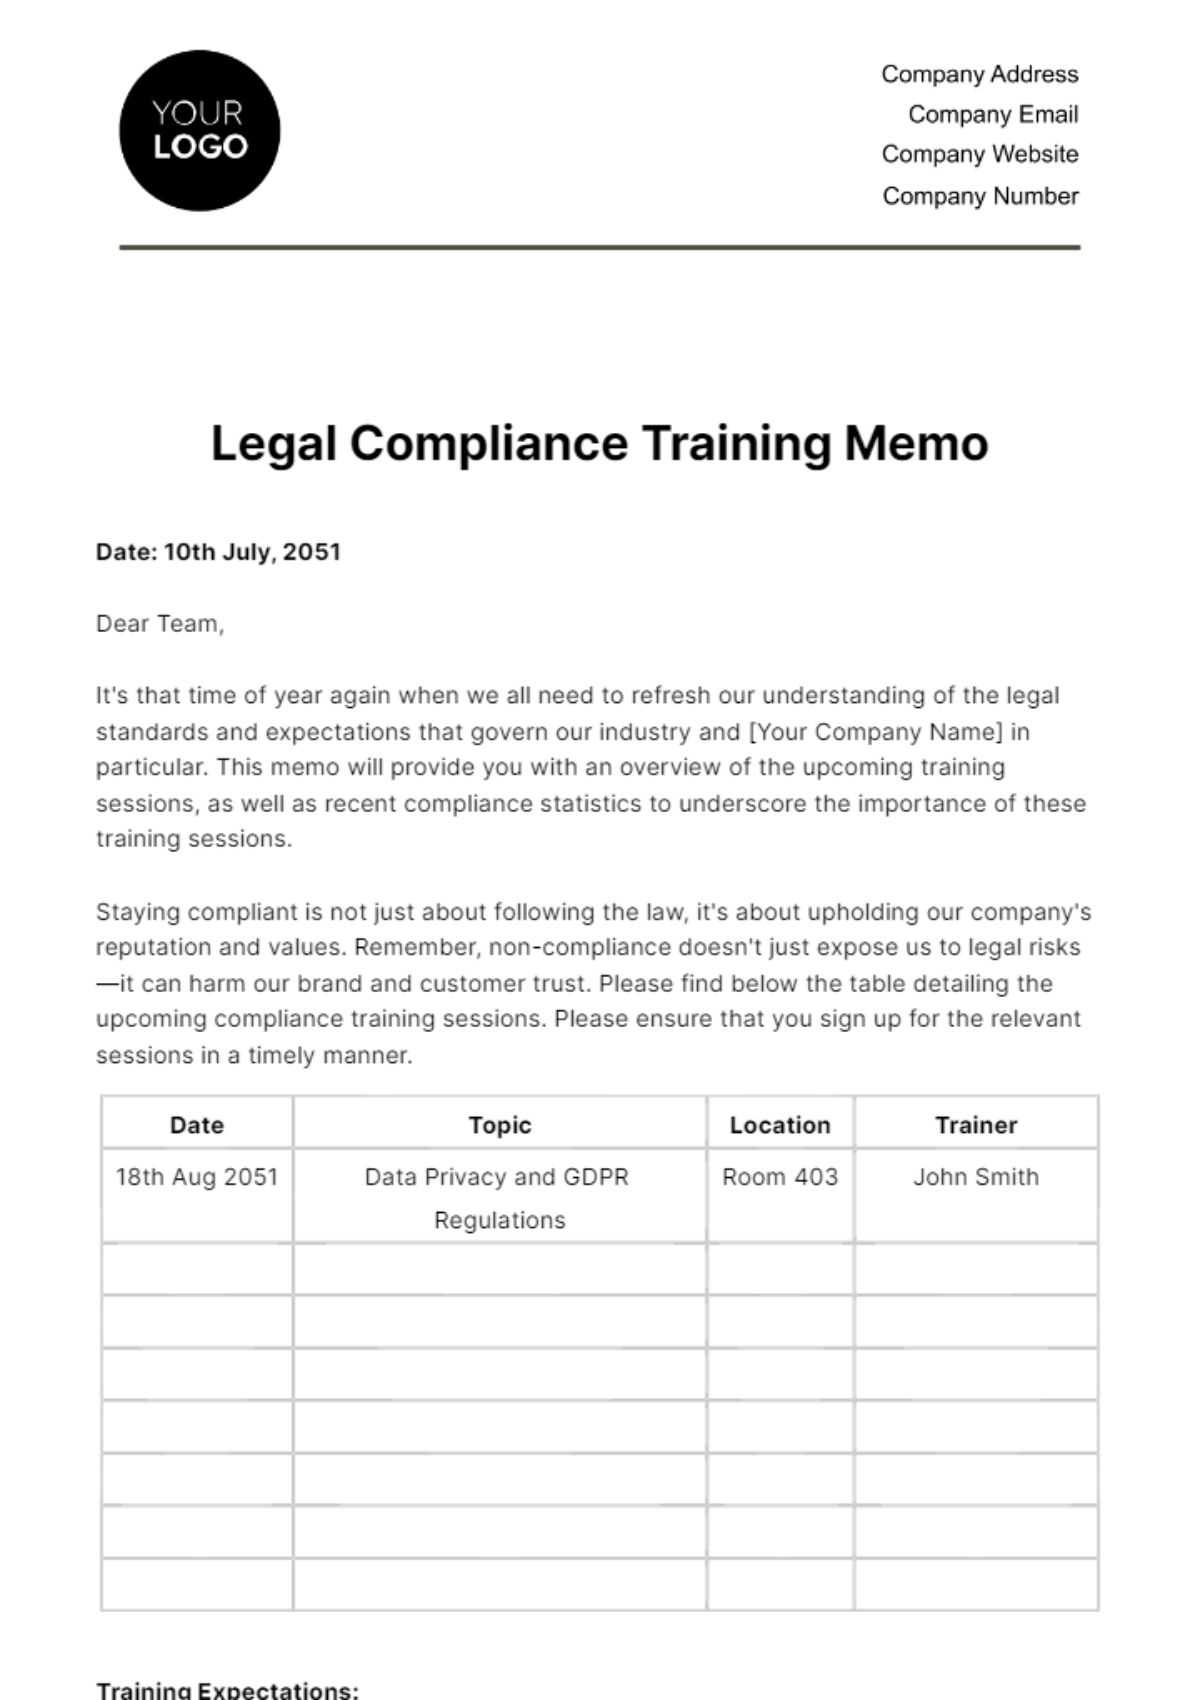 Legal Compliance Training Memo HR Template